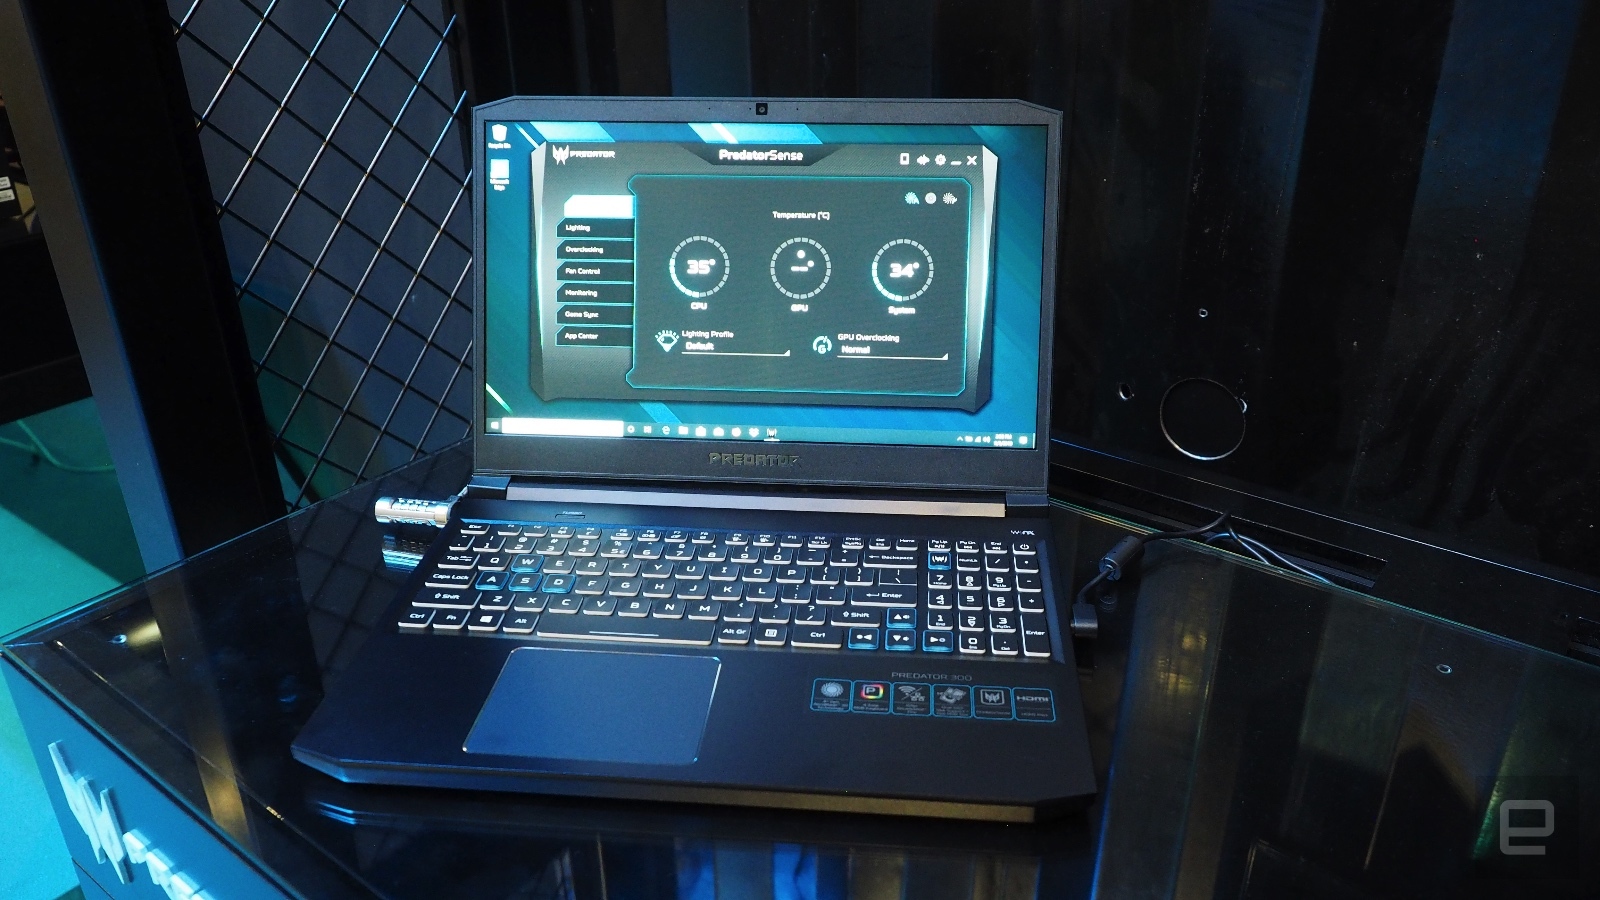 Acer trình làng Predator Triton 300 và ghế chơi game Predator Thronos Air tại sự kiện IFA 2019